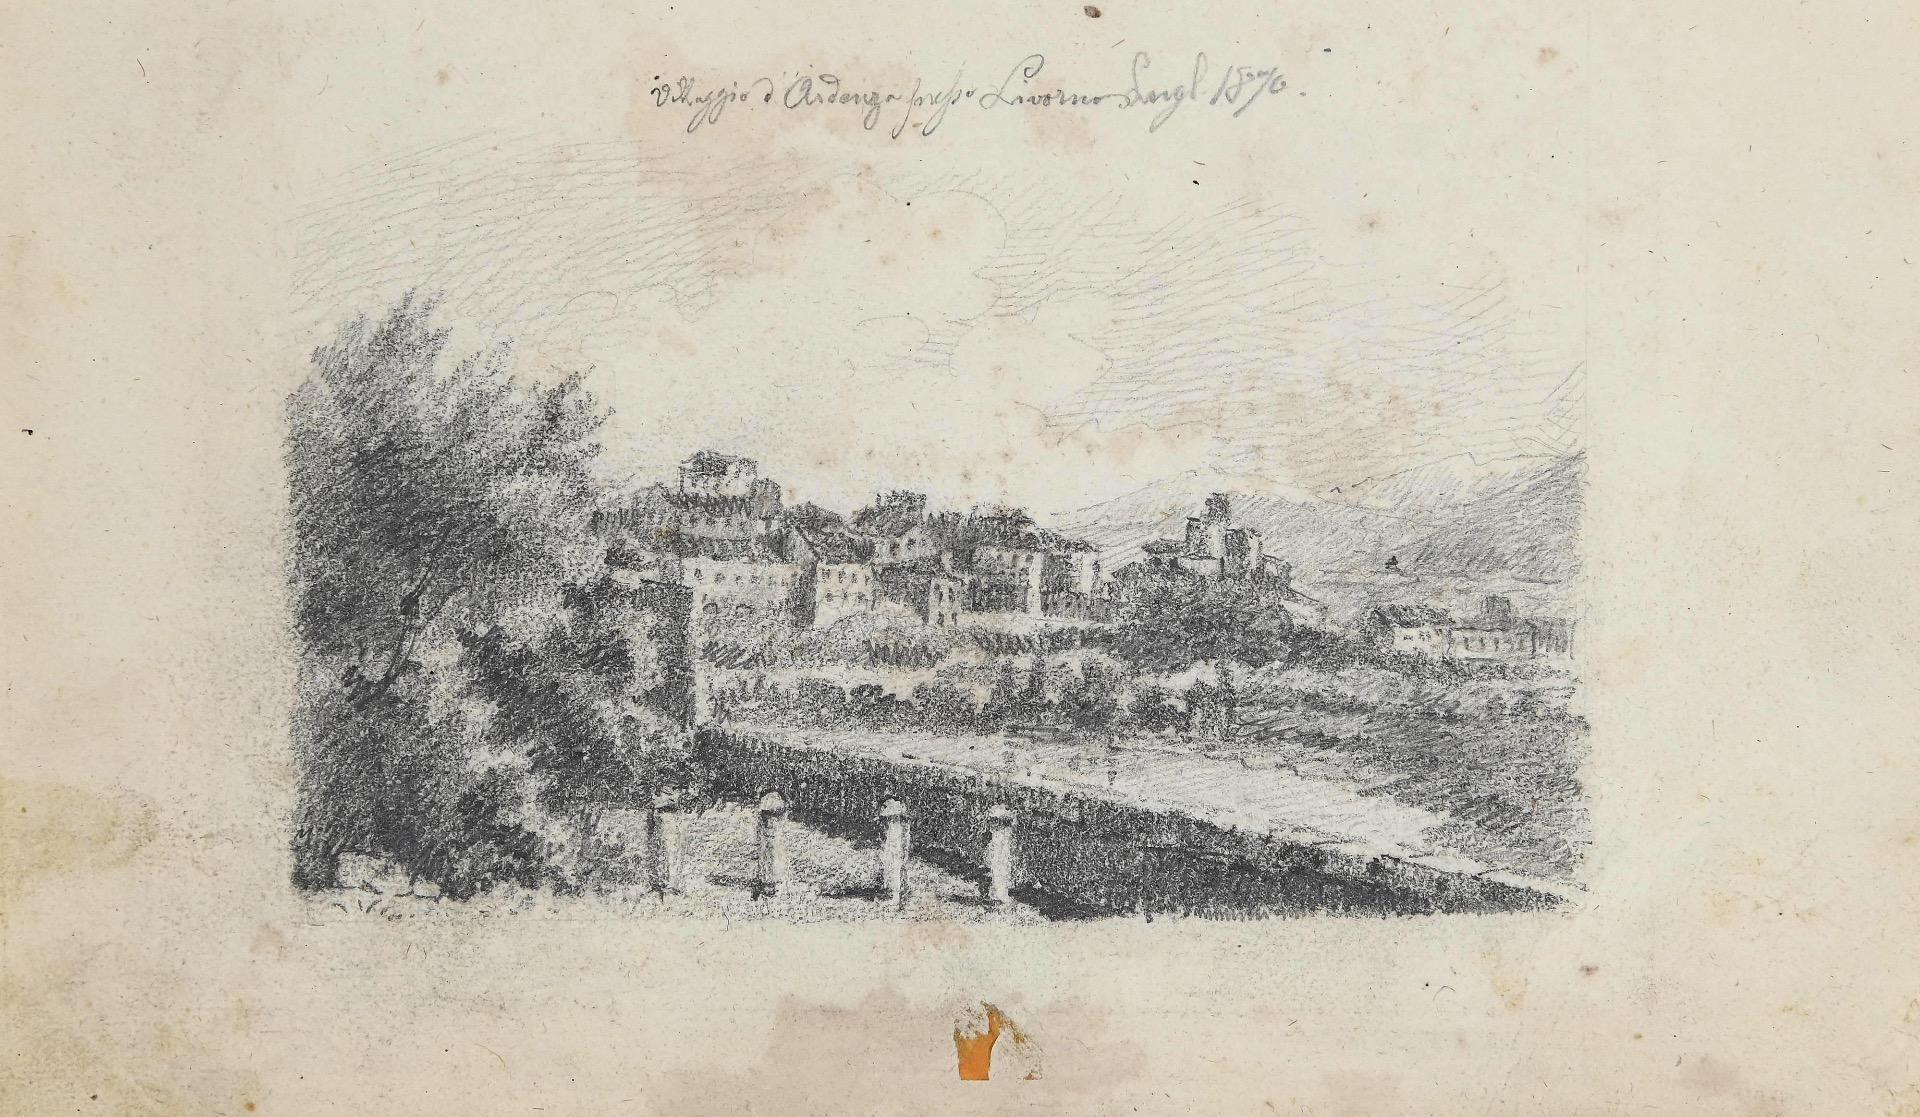 Le paysage urbain d'Ardence, Livorno - dessin original au crayon, 1870